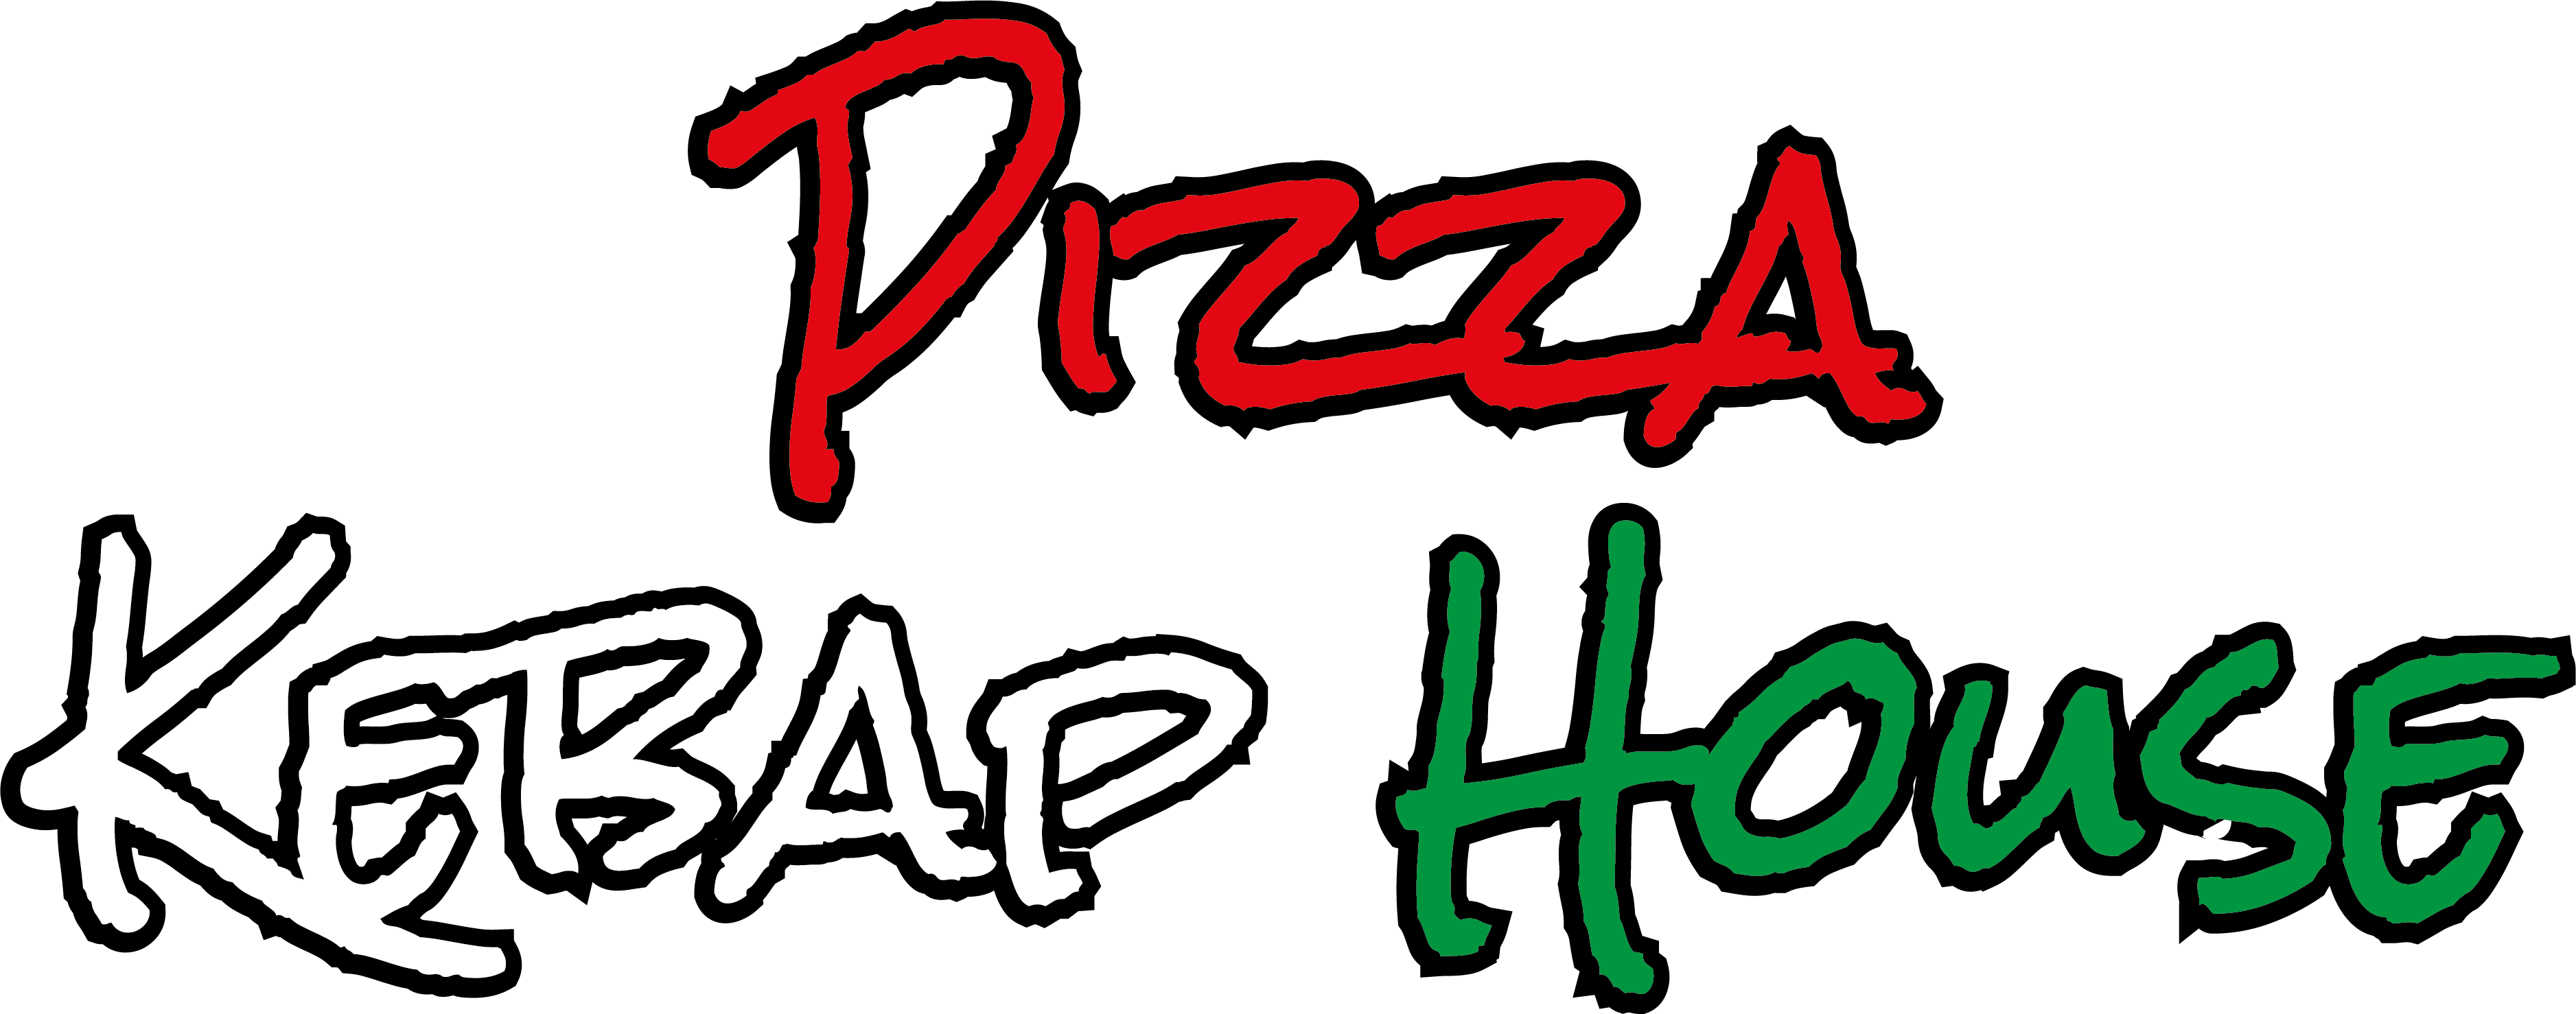 Pizza-Kebap House